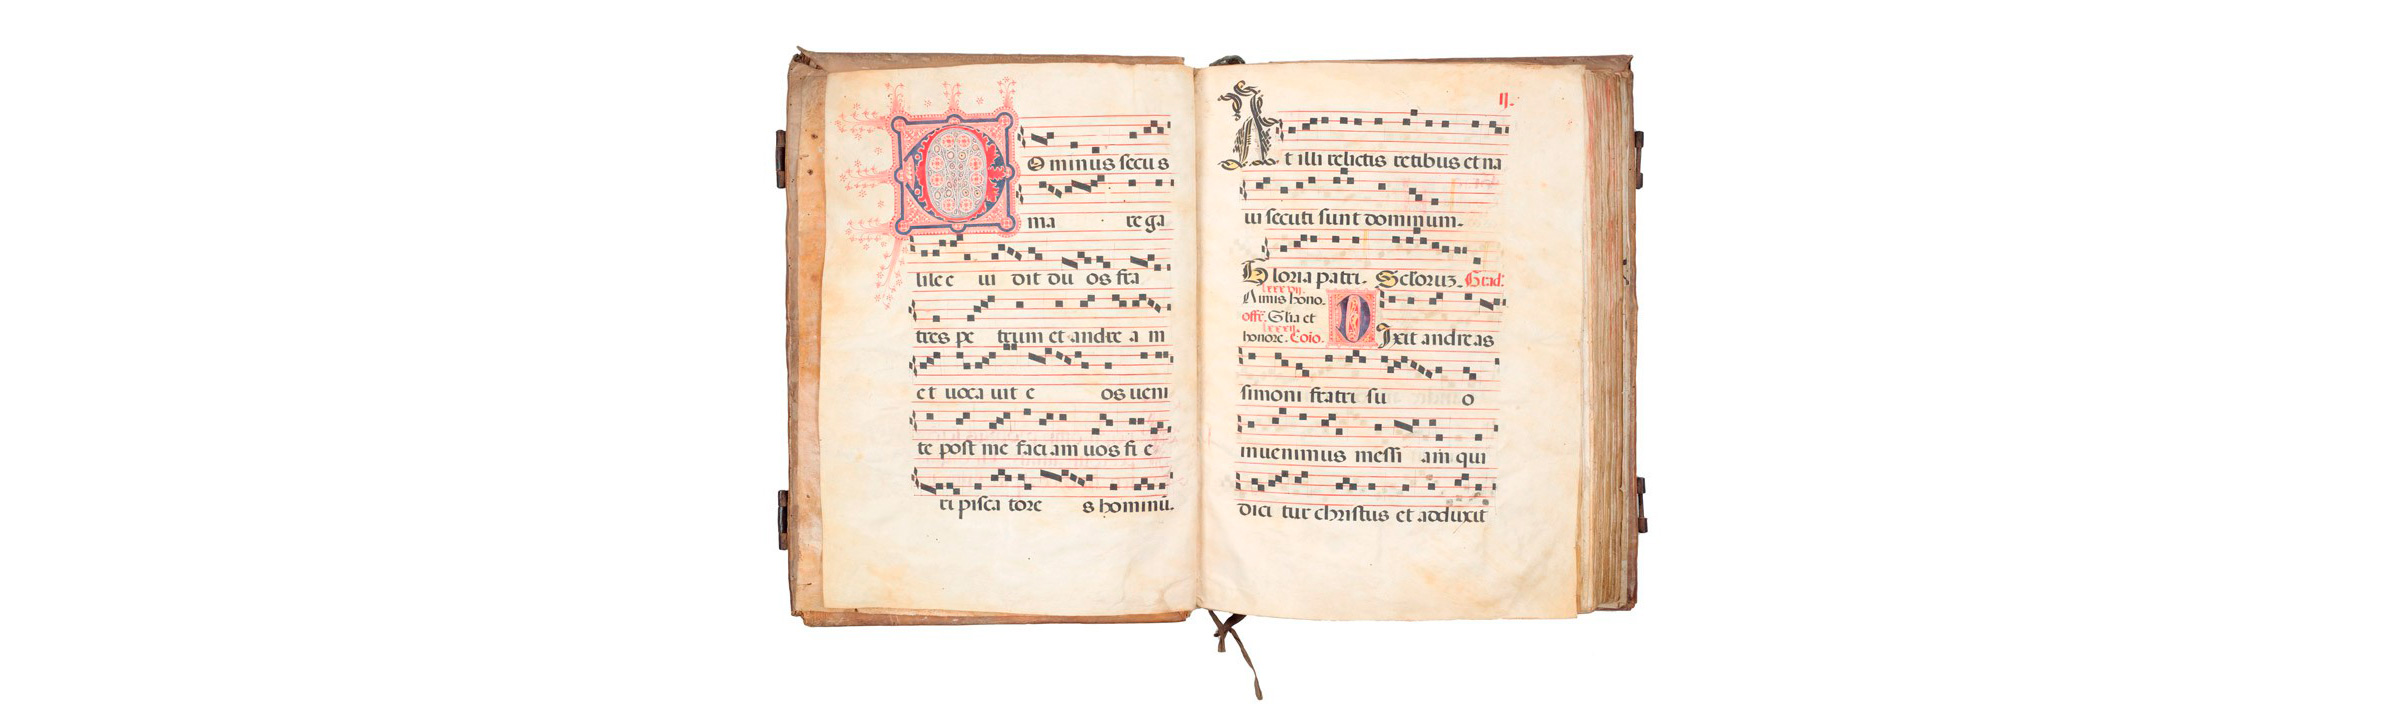 Durán vende por 4.750 euros un cantoral manuscrito del S. XVIII